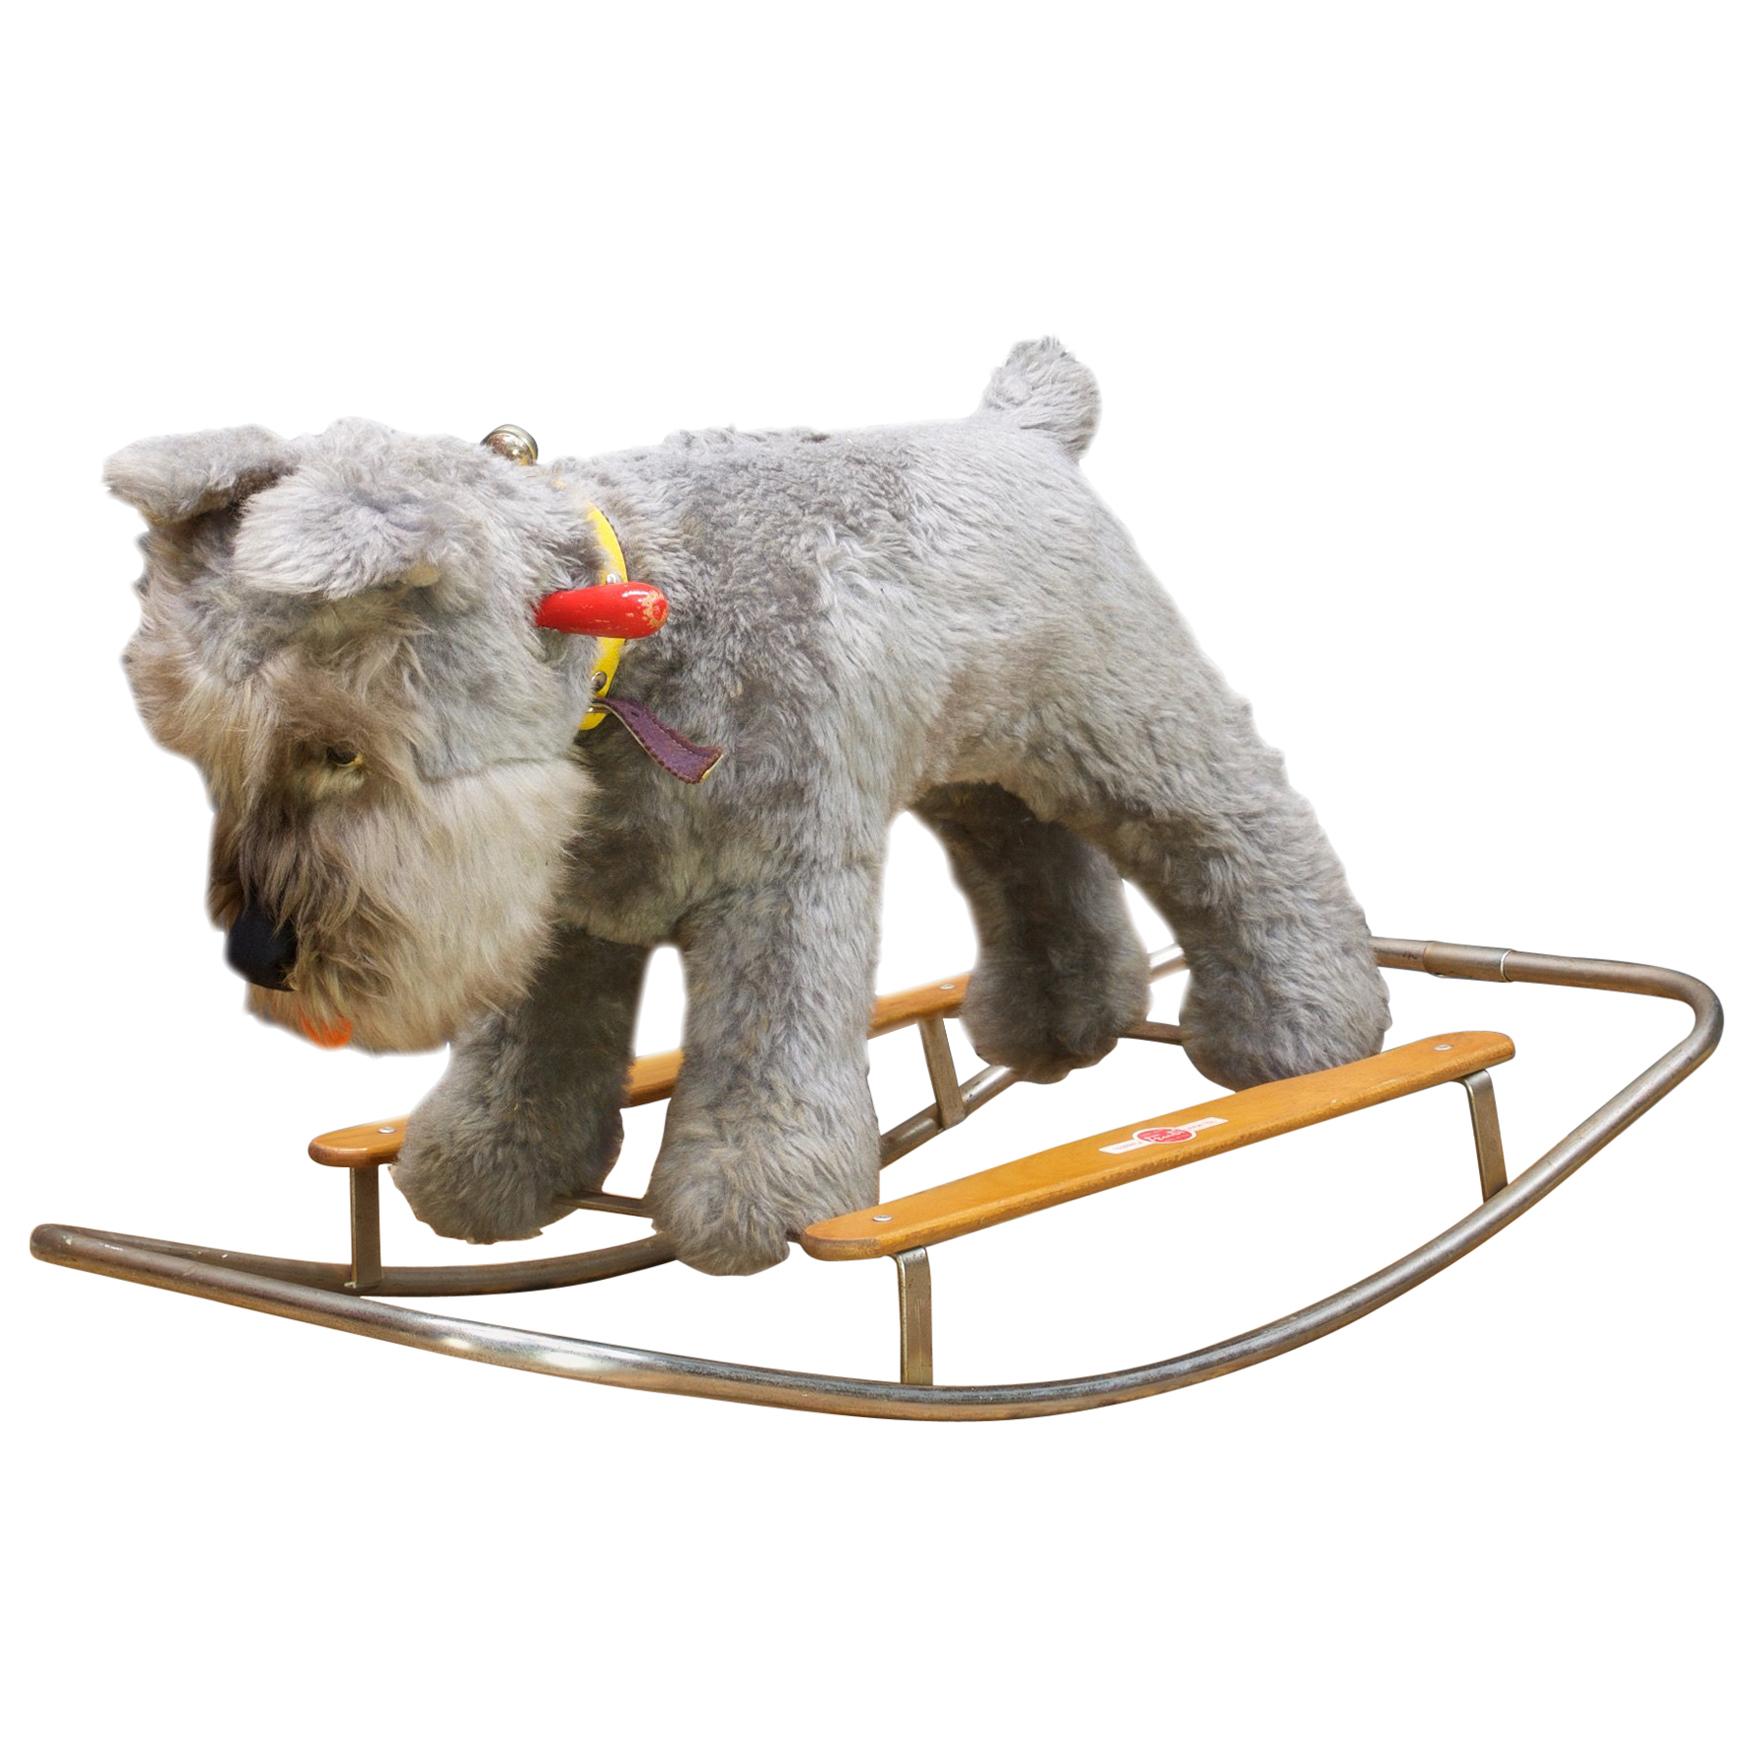 Blue Terrier Dog Childs Rocking Chair Giocattoli Trudi Italy Rocker Toy MCM Isle